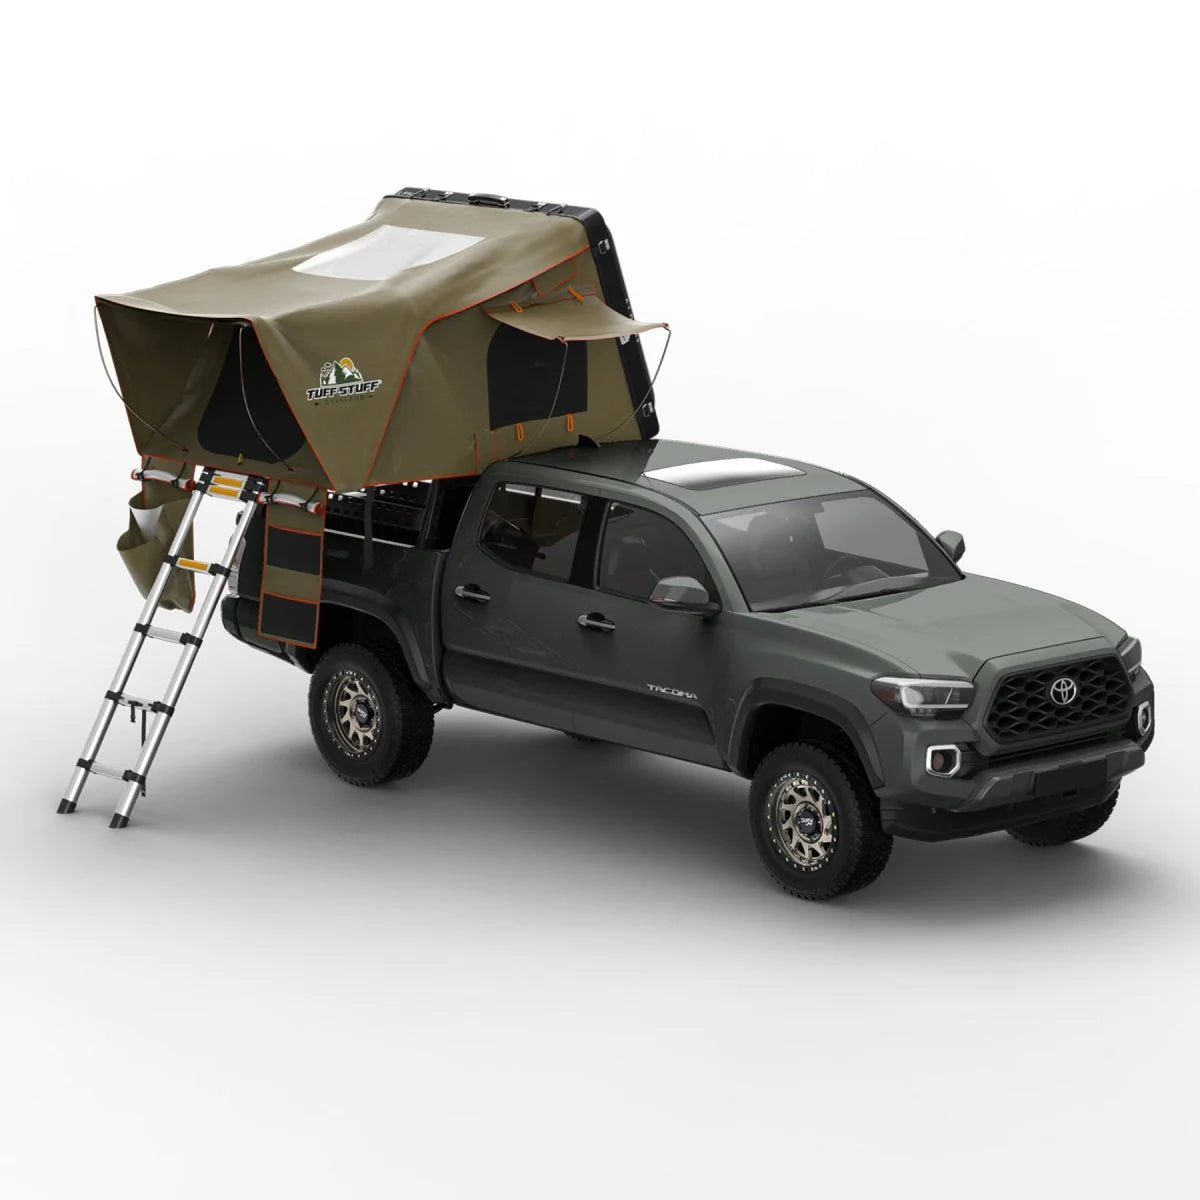 The Pike 2-Person Tent - Camping Essentials California — Rigid Armor